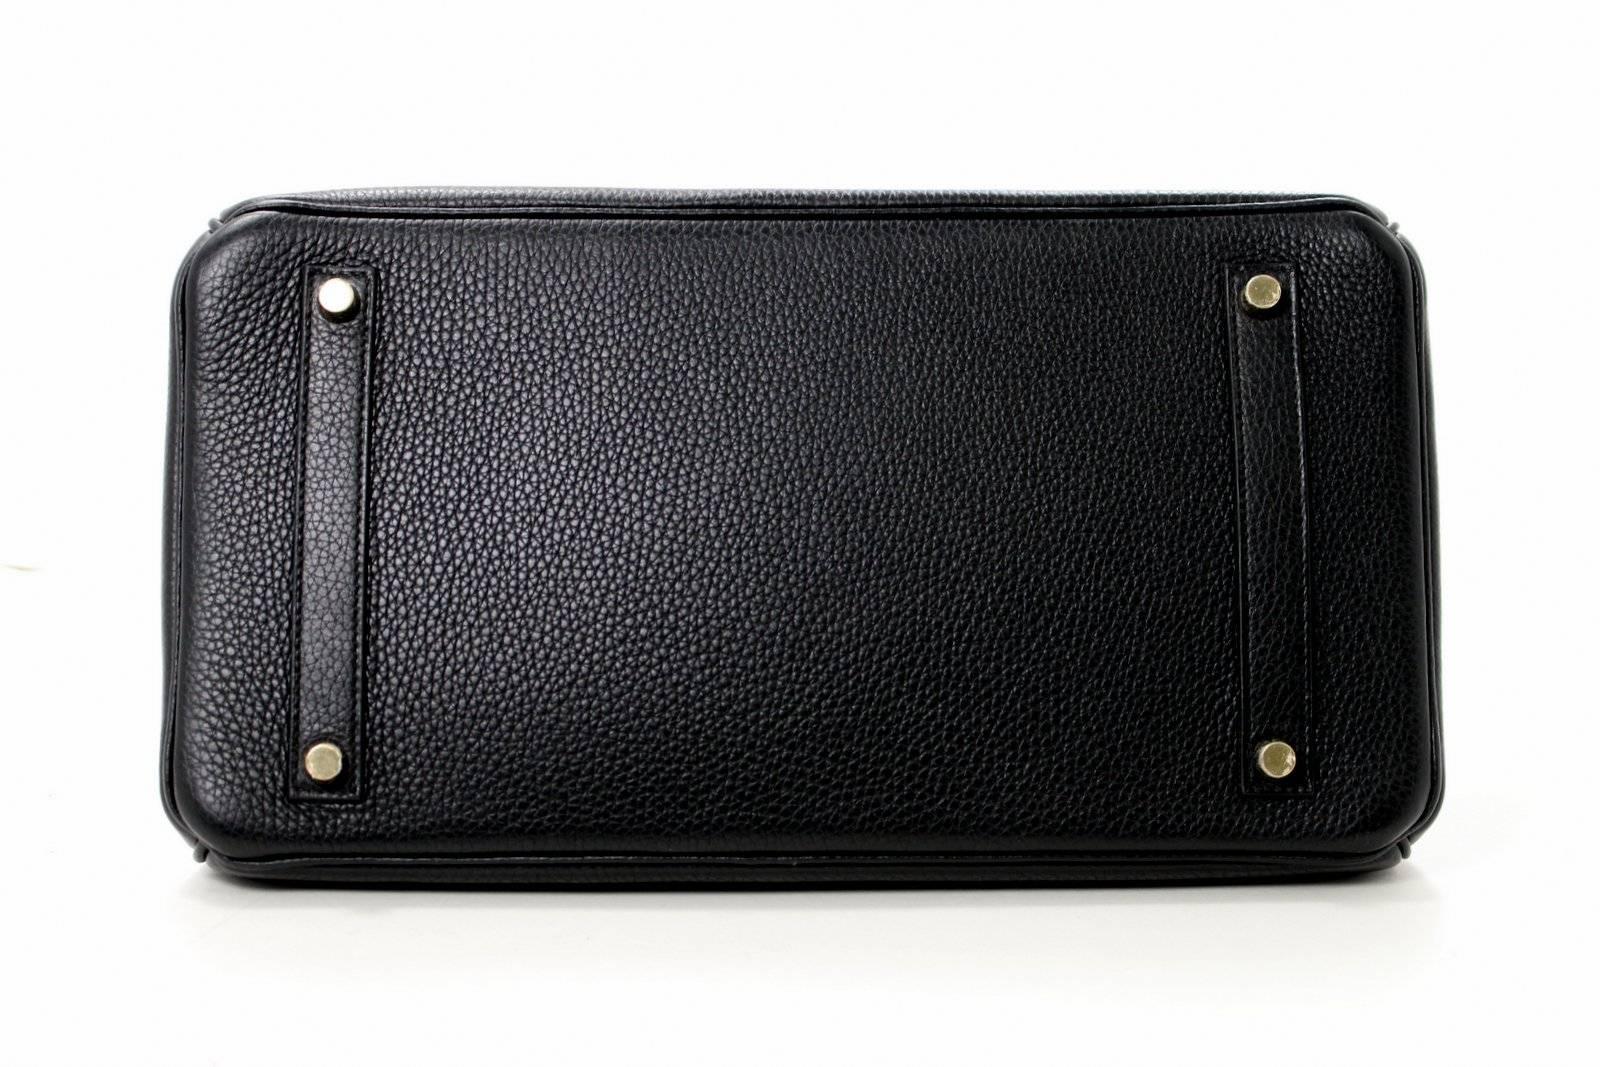 Black Hermès 35 cm Birkin Bag in BLACK Togo Leather with Gold